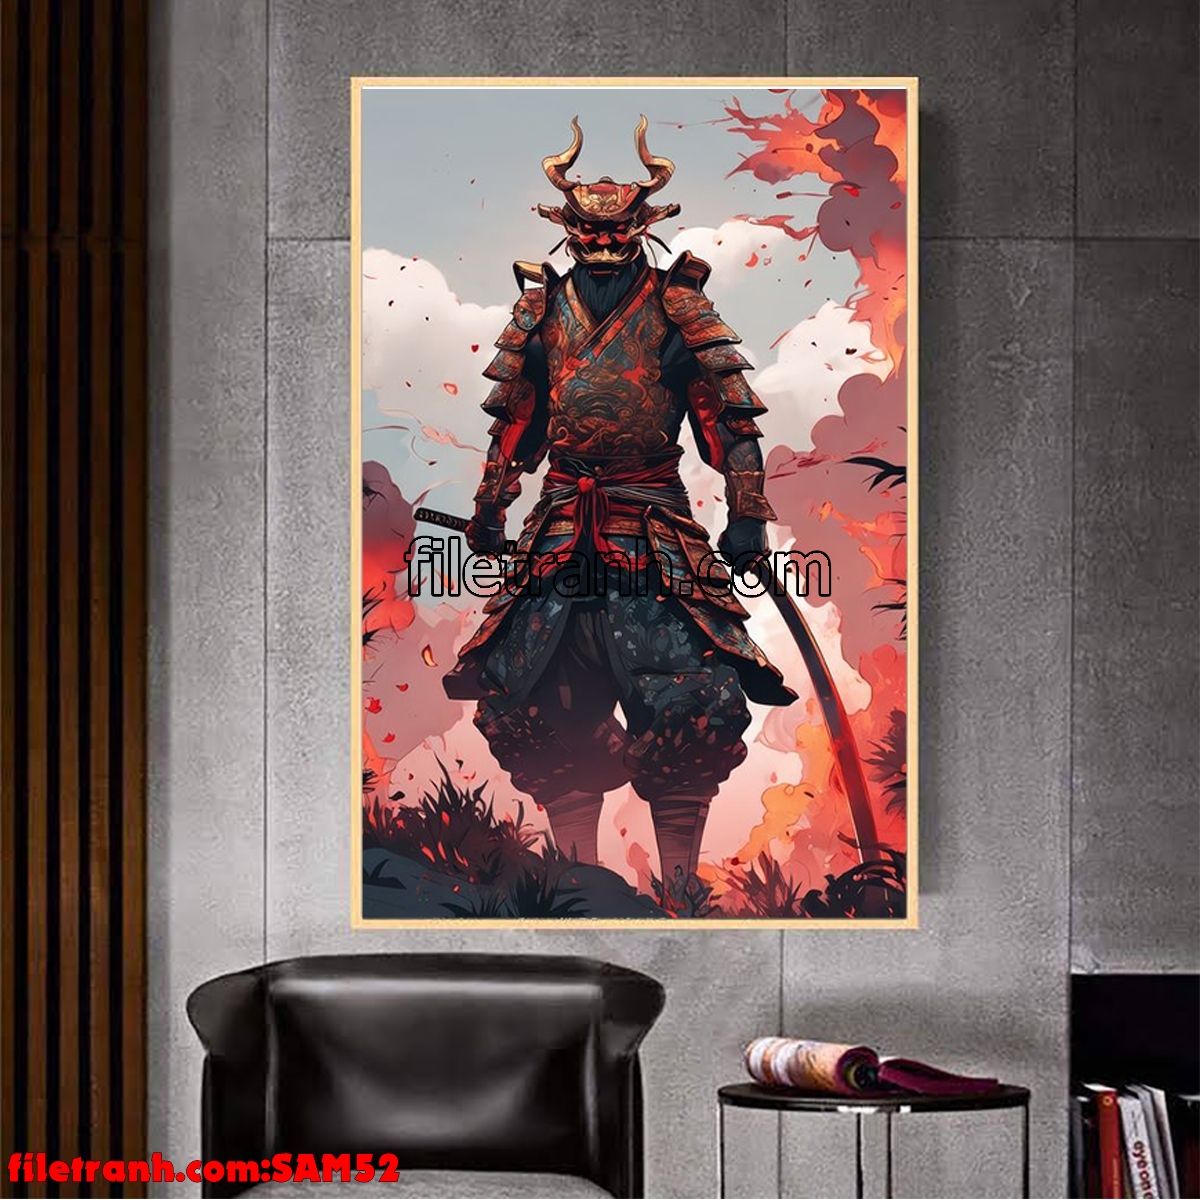 https://filetranh.com/tuong-nen/file-tranh-samurai-vo-si-nhat-ban-sam52.html